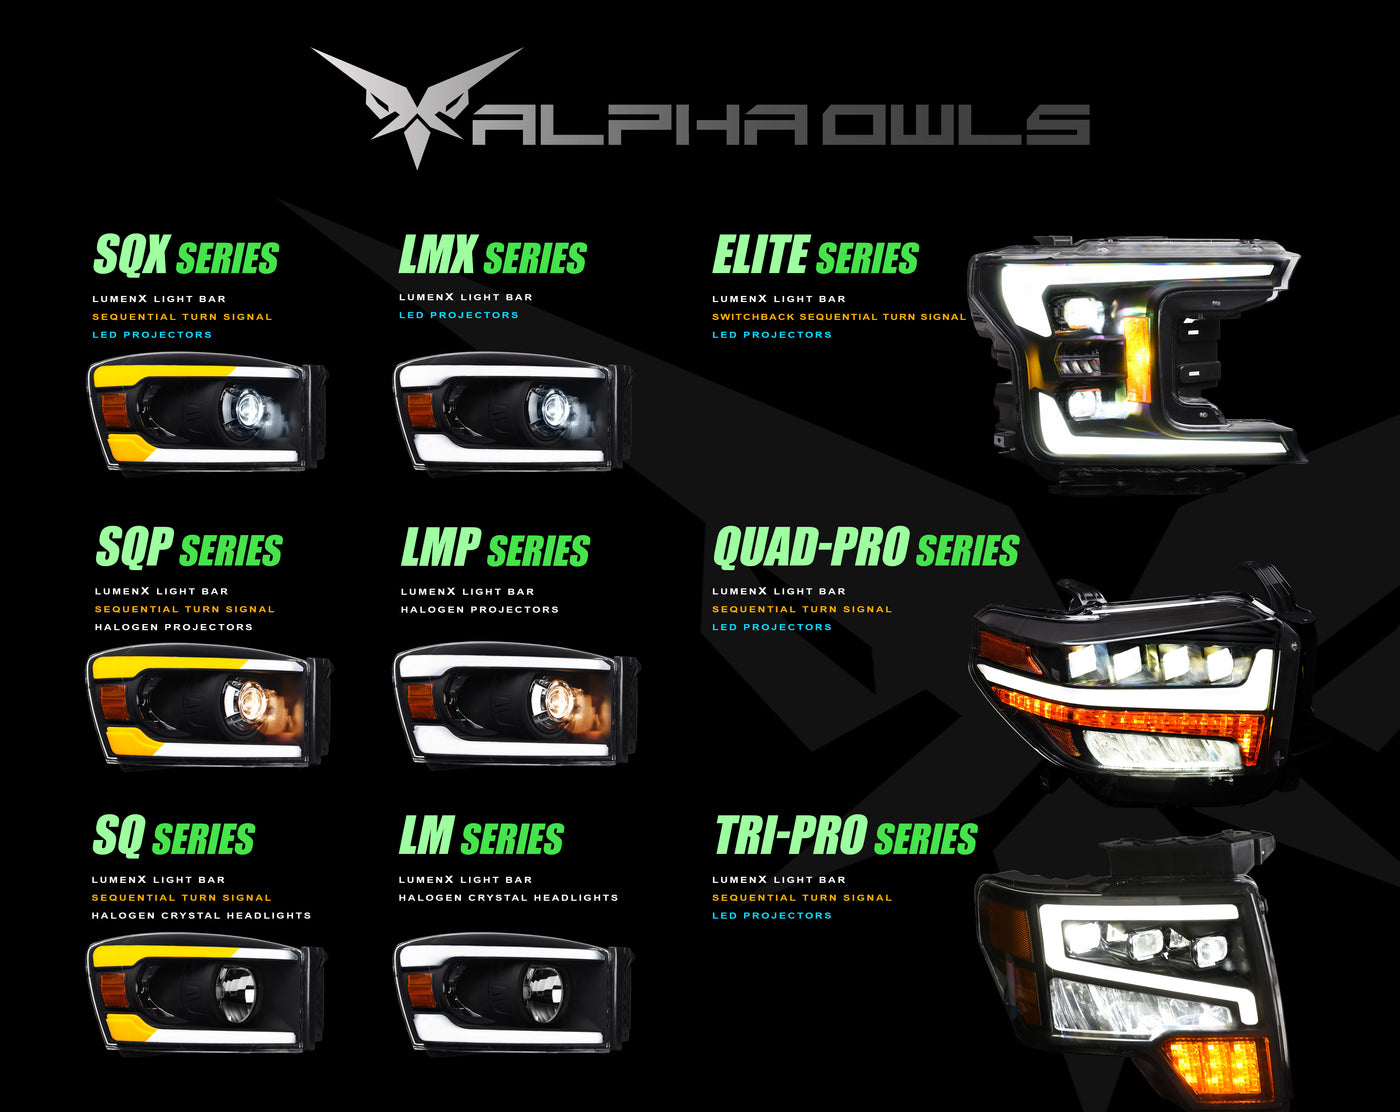 Alpha Owls Headlights, Alpha Owls Dodge Headlights, Dodge 2003-2005 Headlights, Dodge Ram 2500/3500 Headlights, Headlights, Chrome housing Headlights